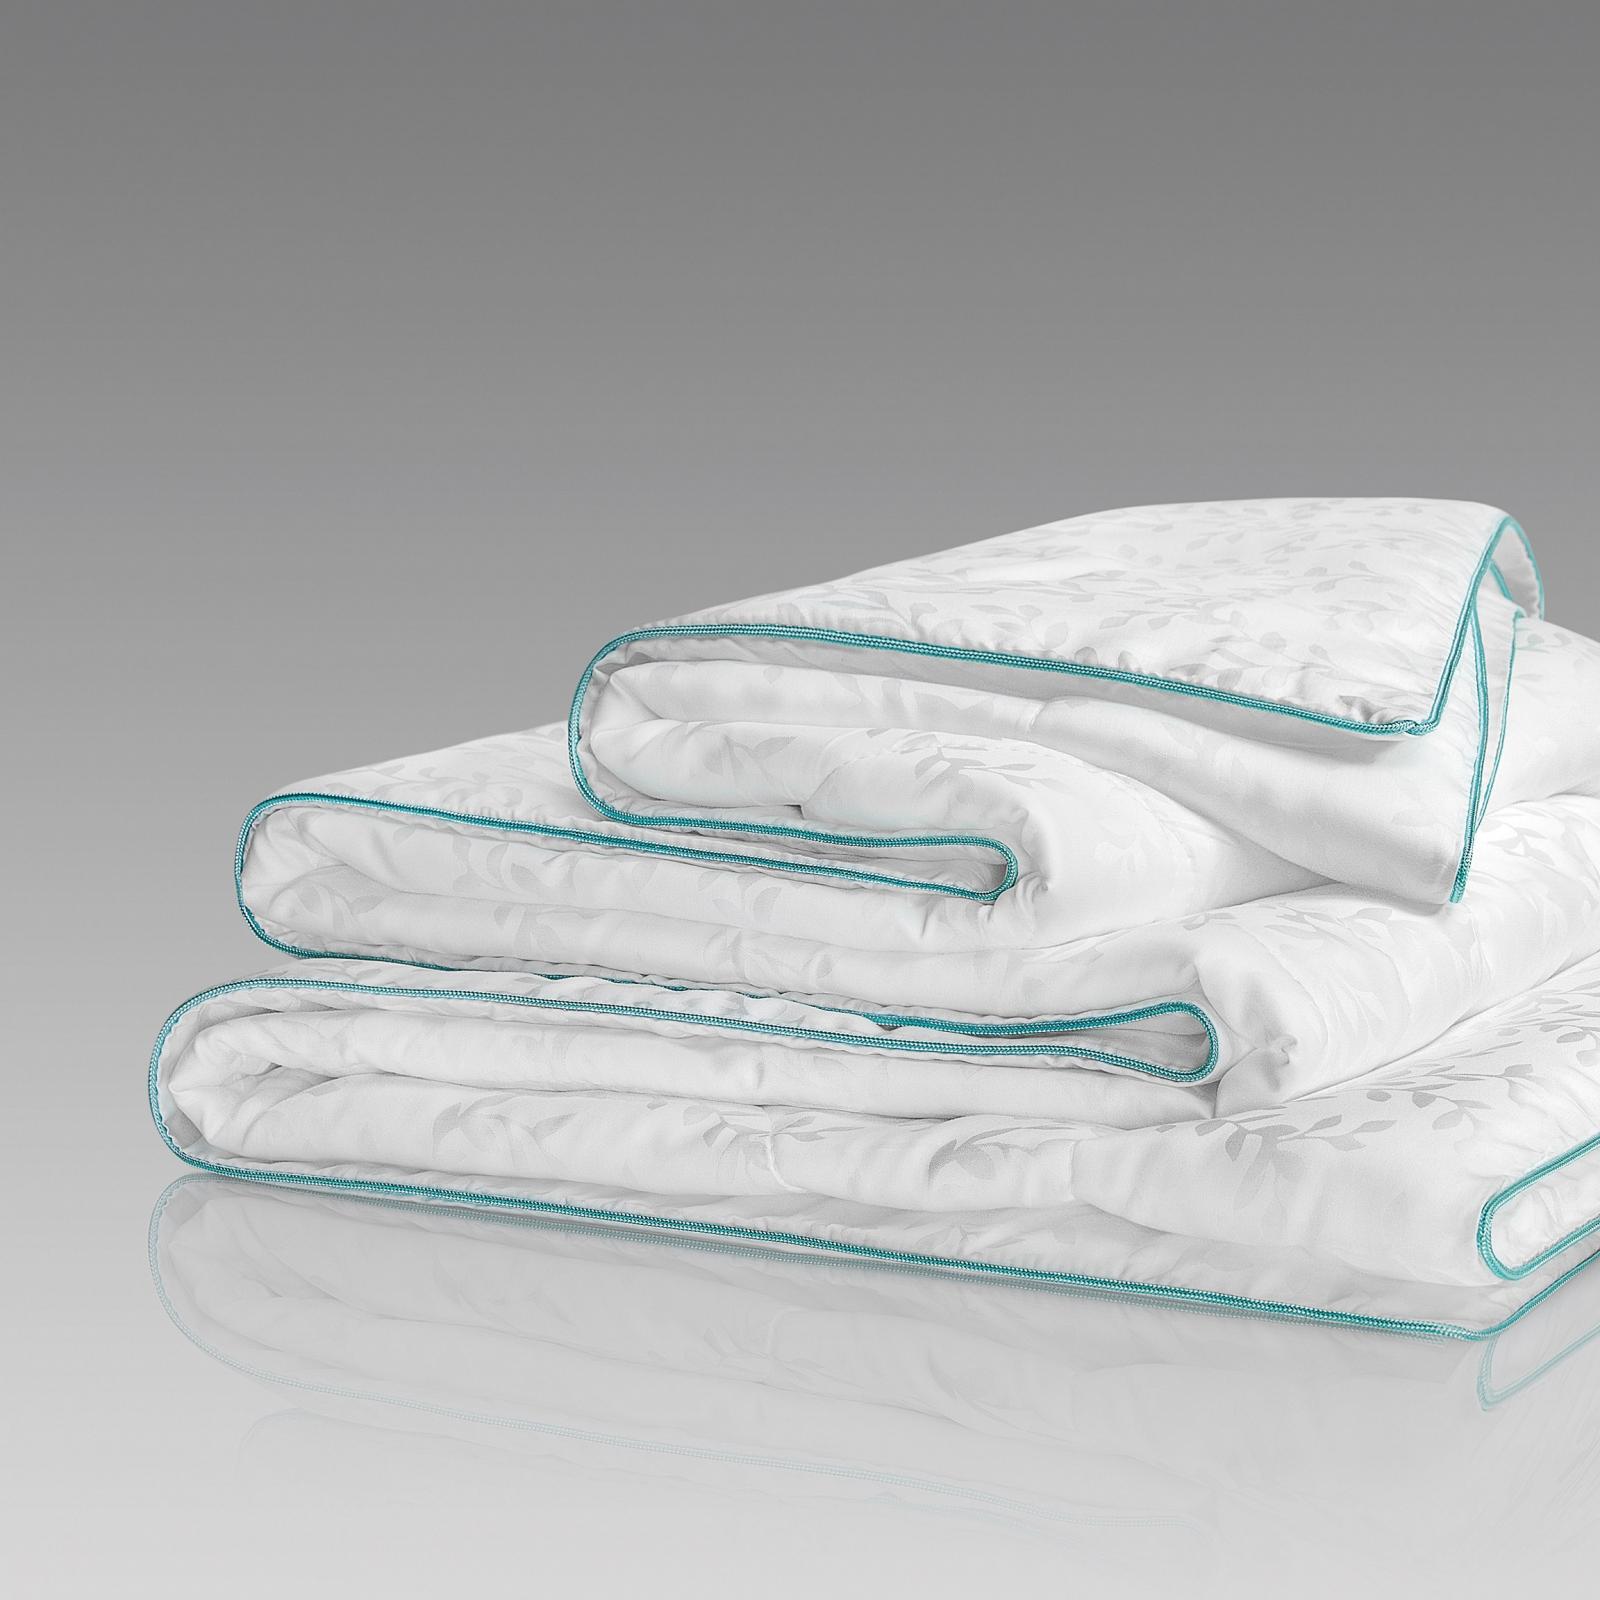 Одеяло Togas эвкалипт дримс 140х200, размер 140х200 см - фото 6